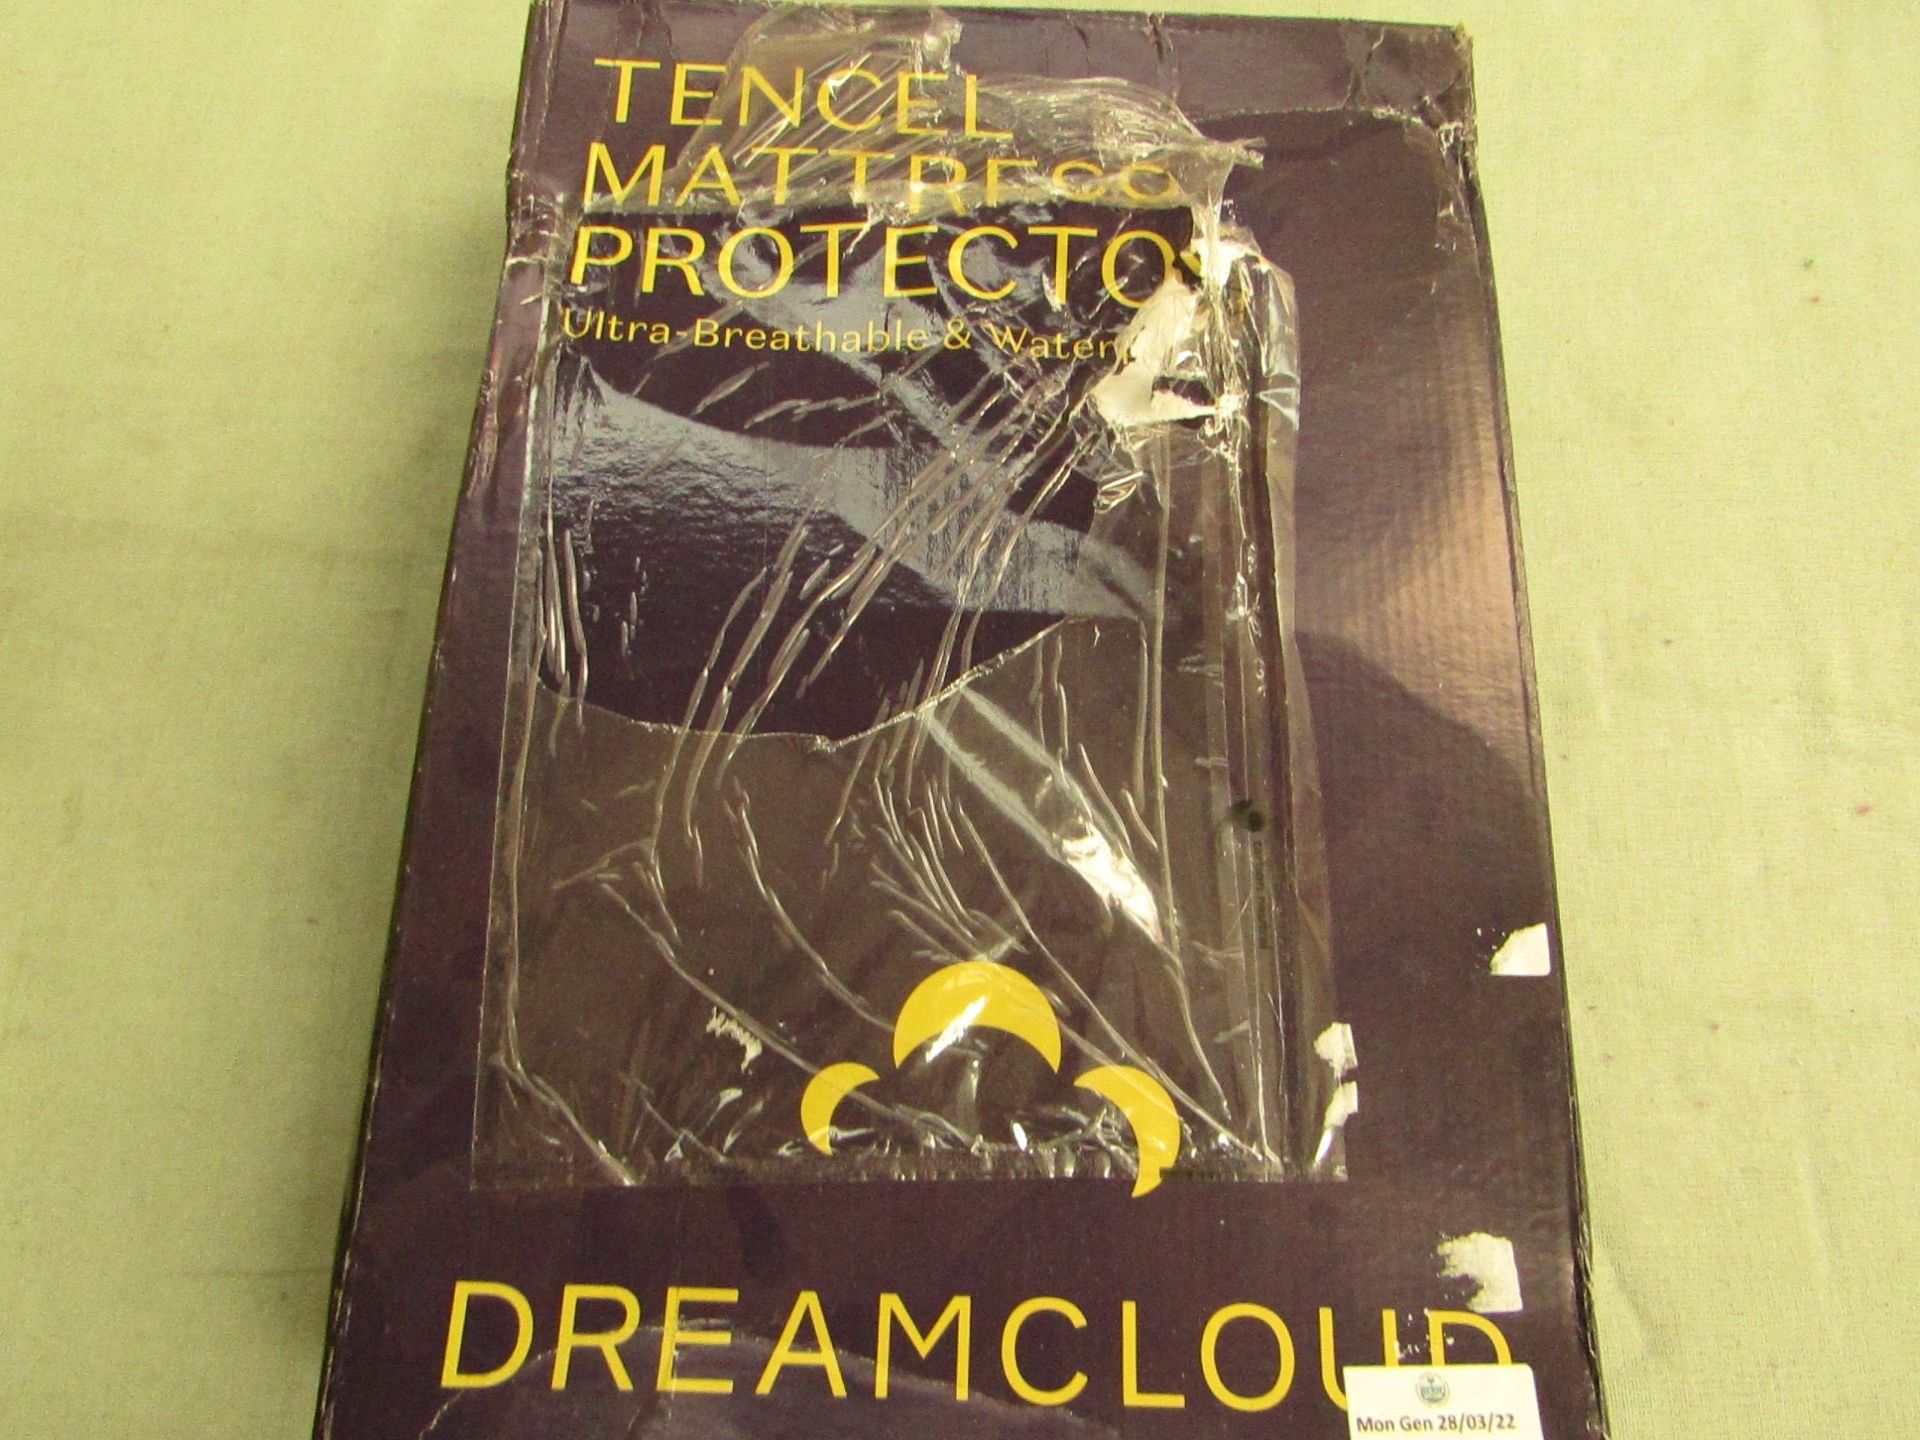 4x Dreamcloud Sleep - Ultra-Breathable & Waterproof Tencel Mattress Protector ( Single ) - Unchecked